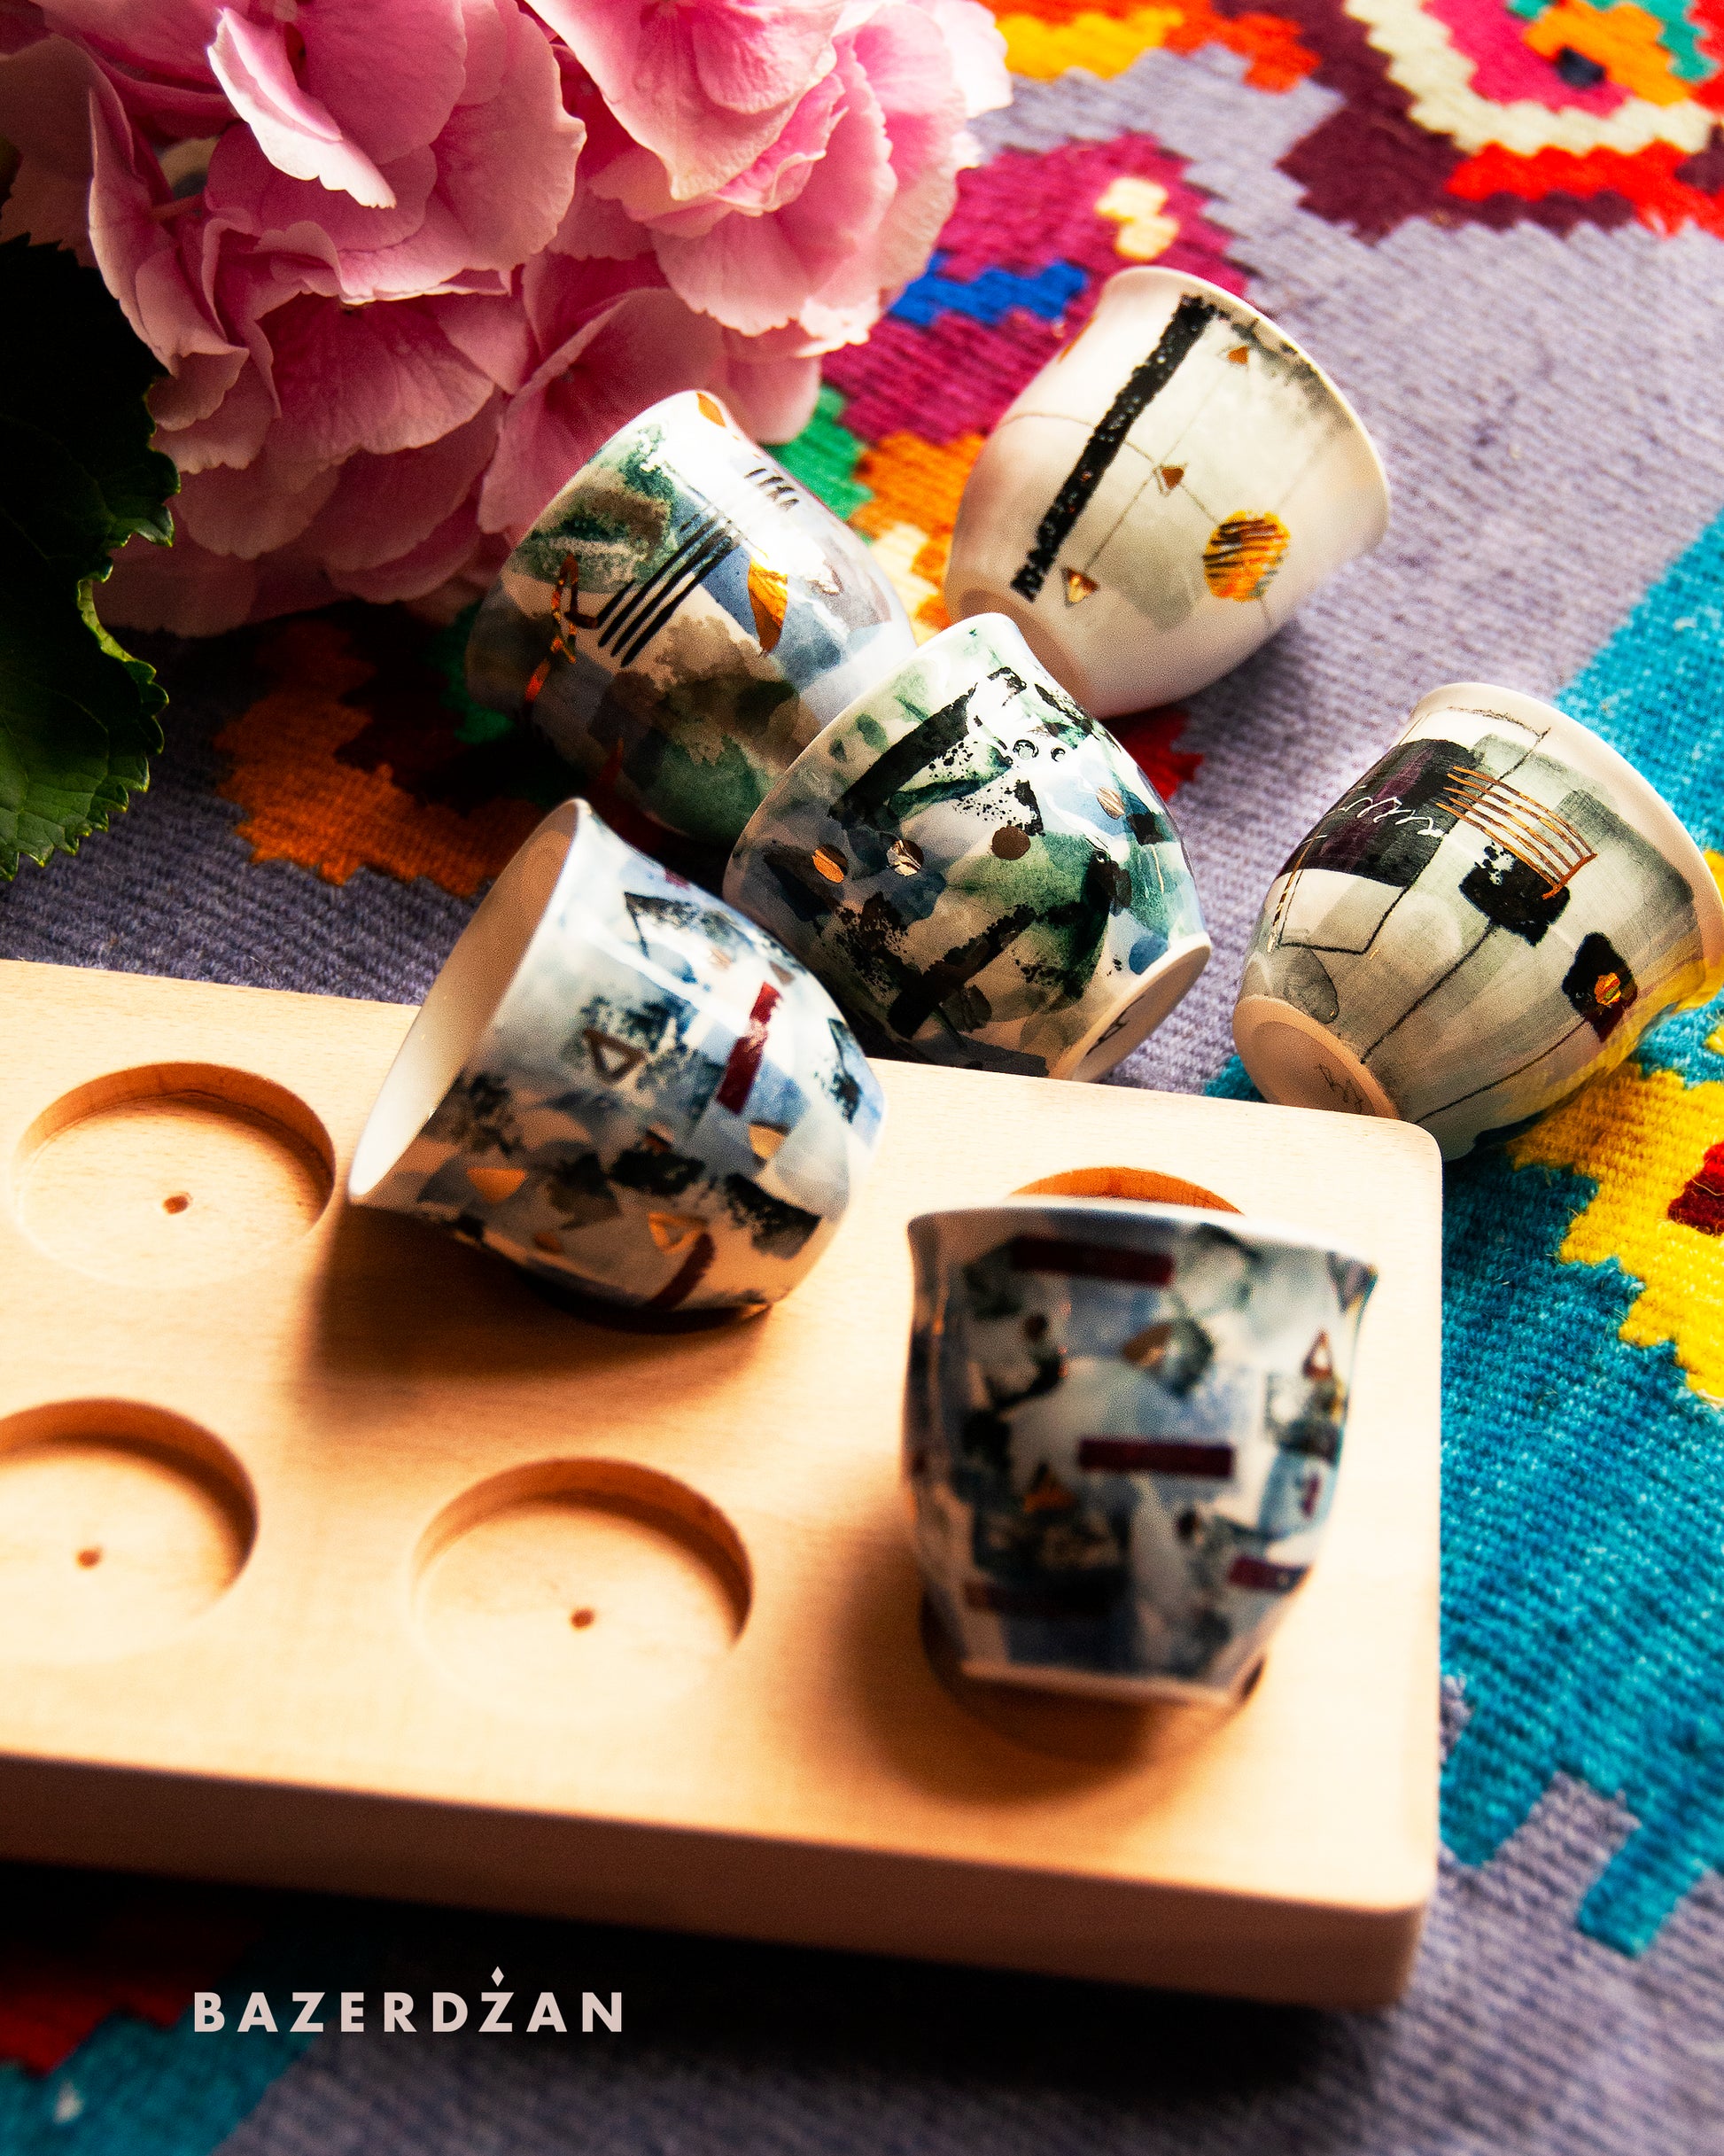 Ceramic Hand Painted Fildzan Cup Set by bokajok - Bazerdzan